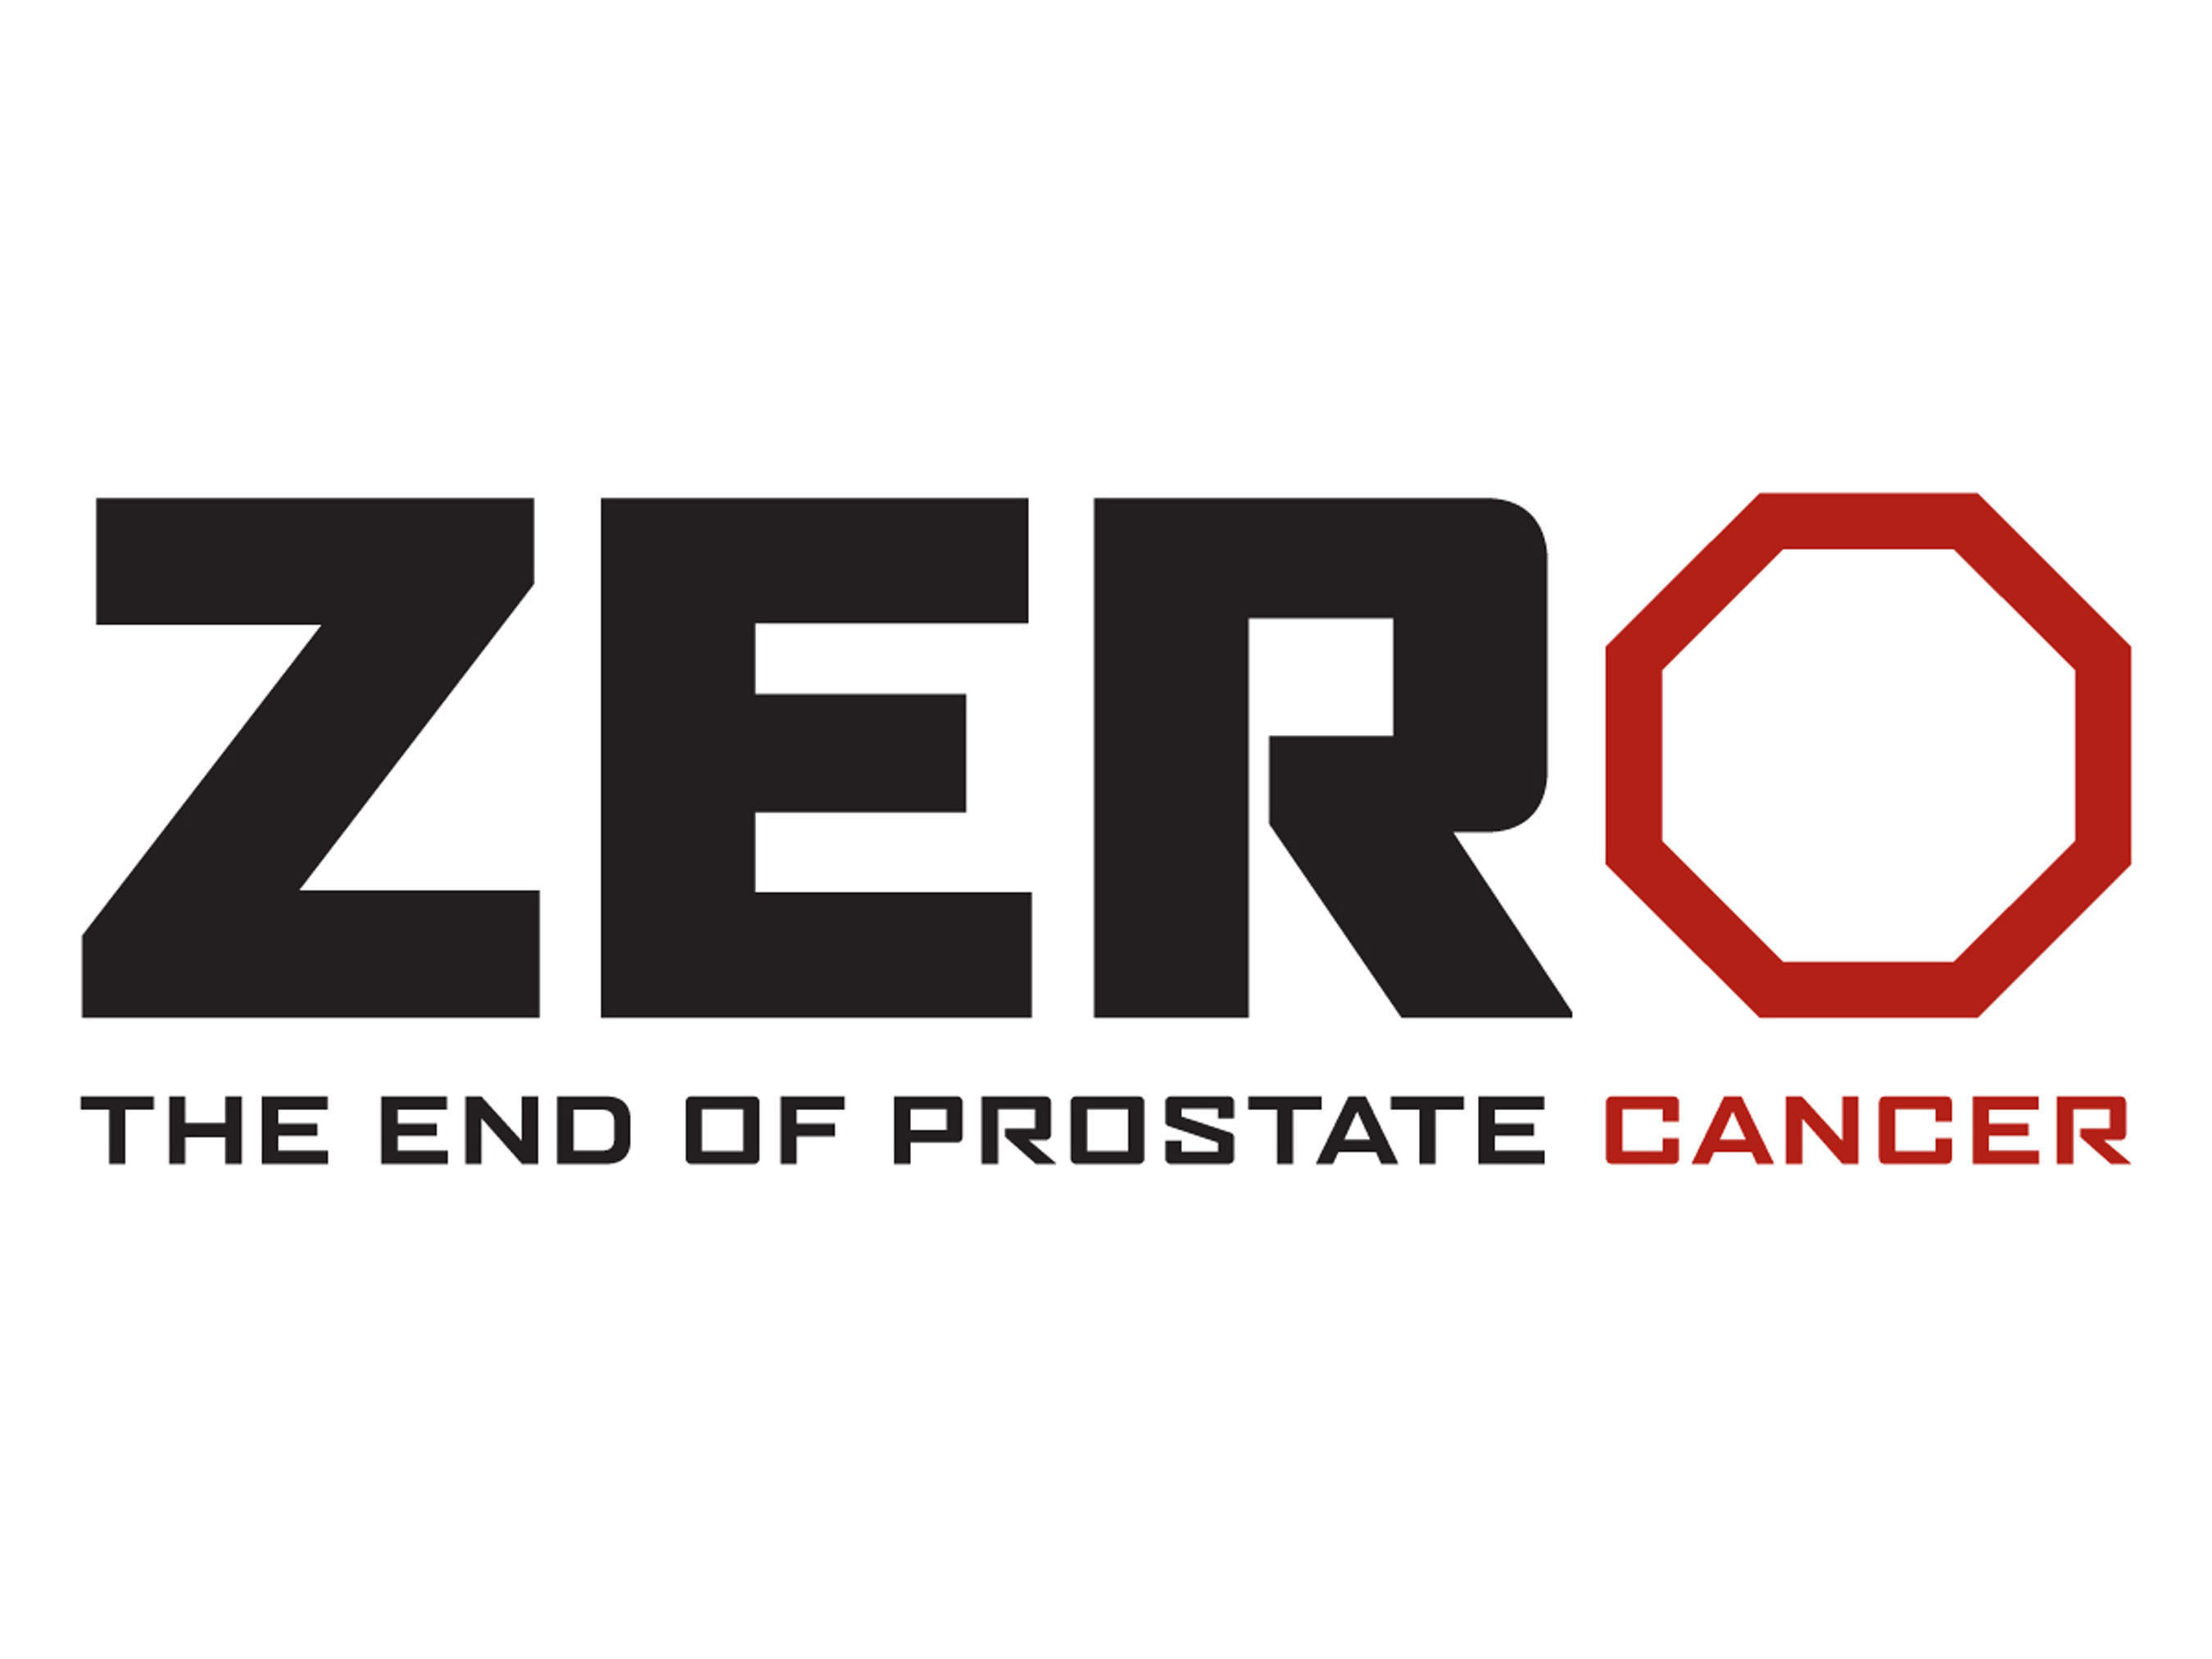 ZERO - The End of Prostate Cancer logo.